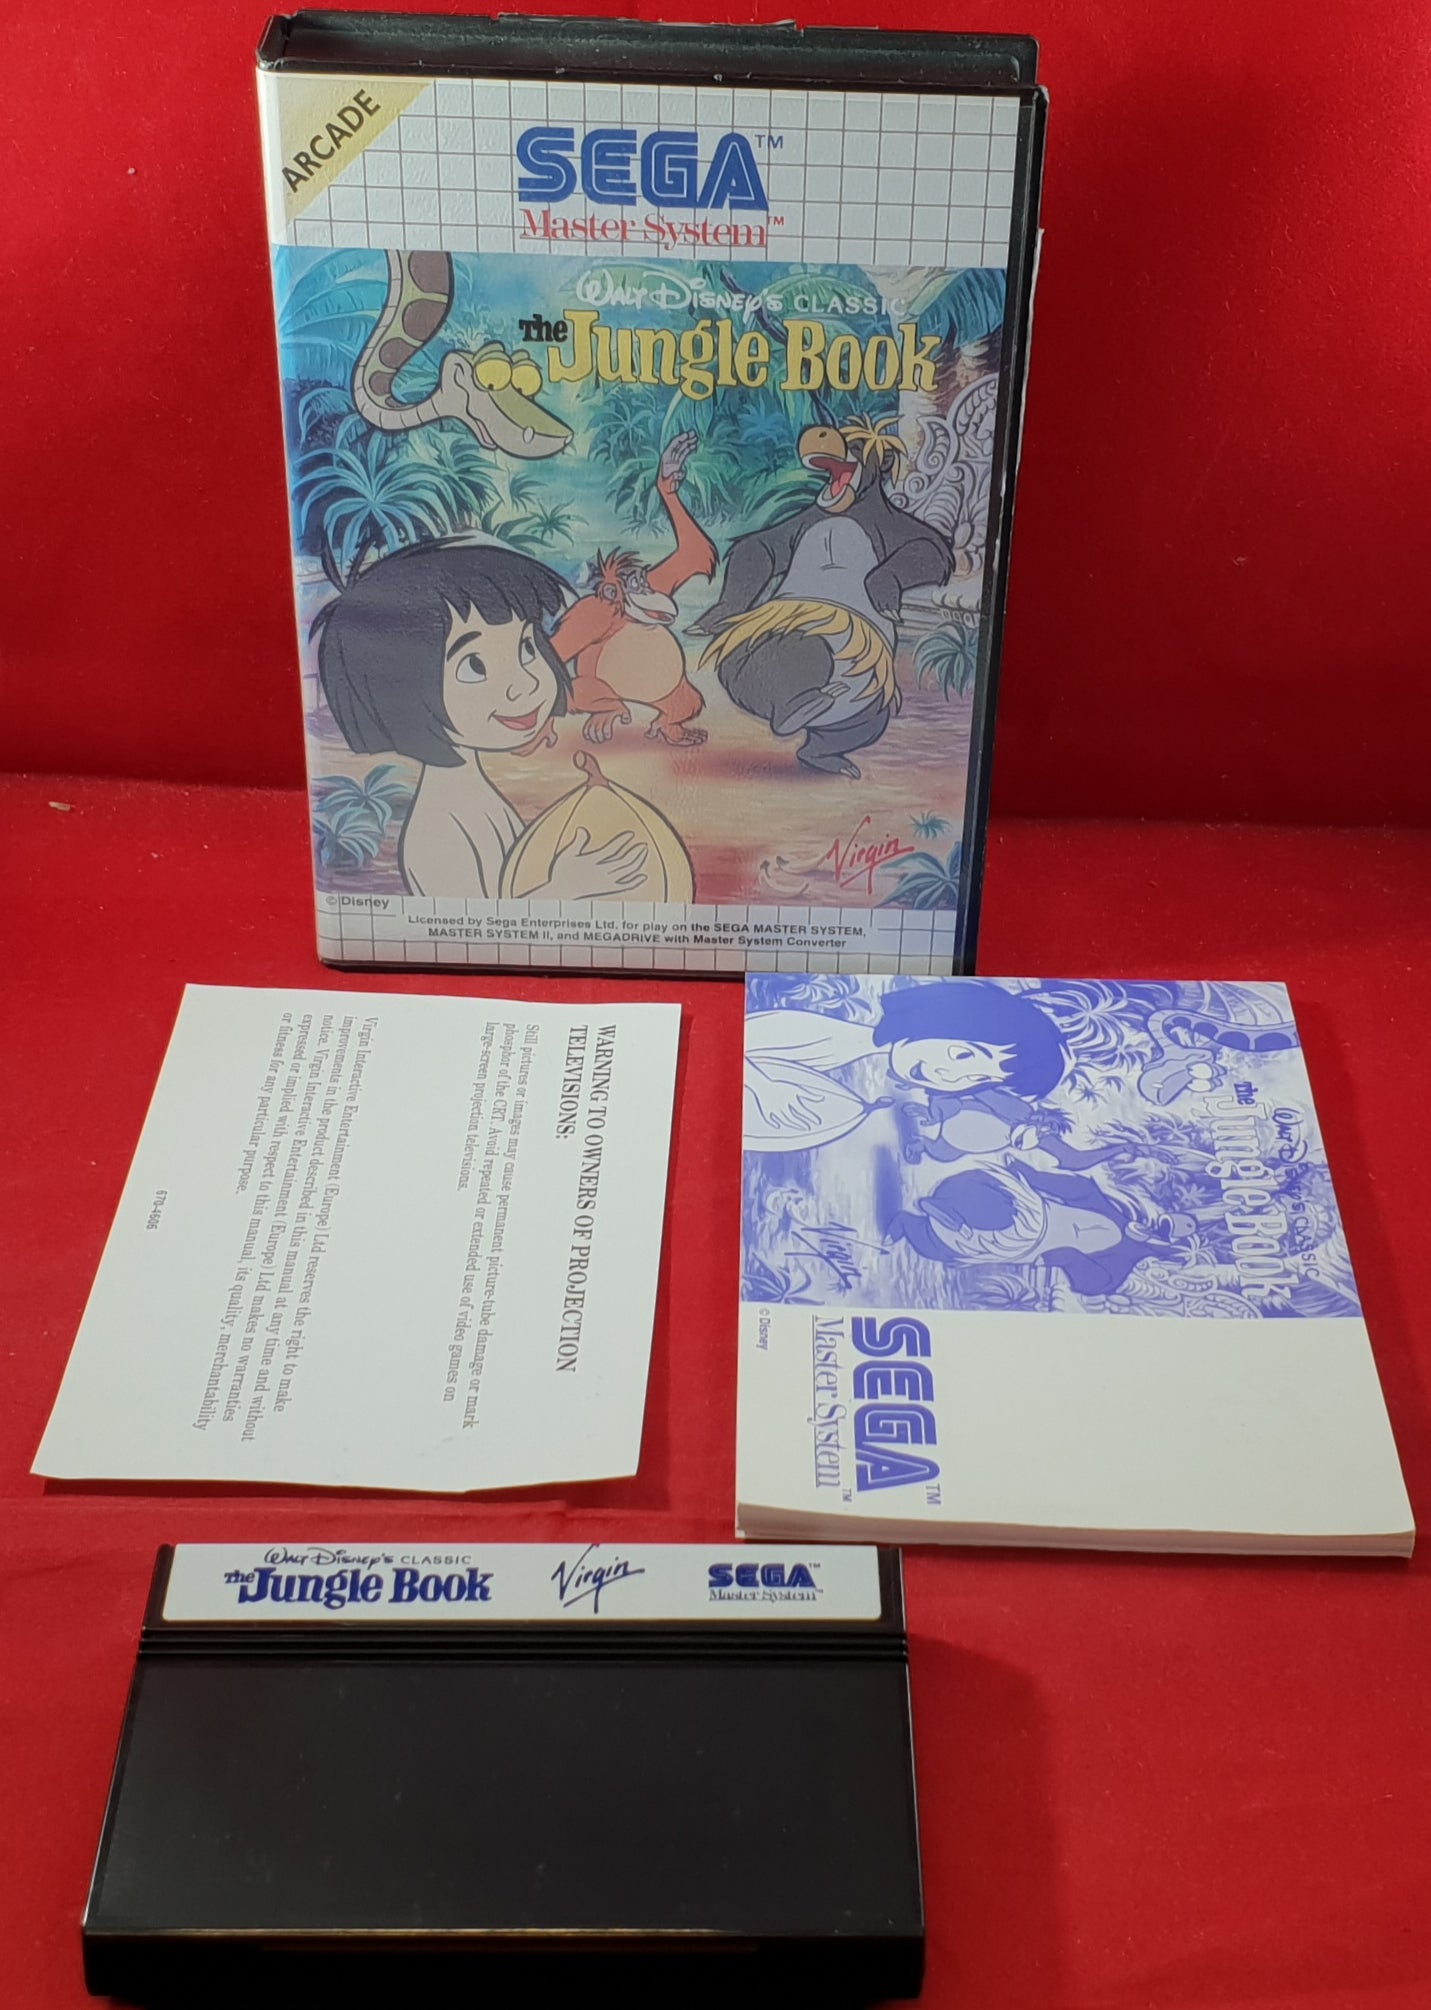 Walt Disney's Classic The Jungle Book Sega Master System Game